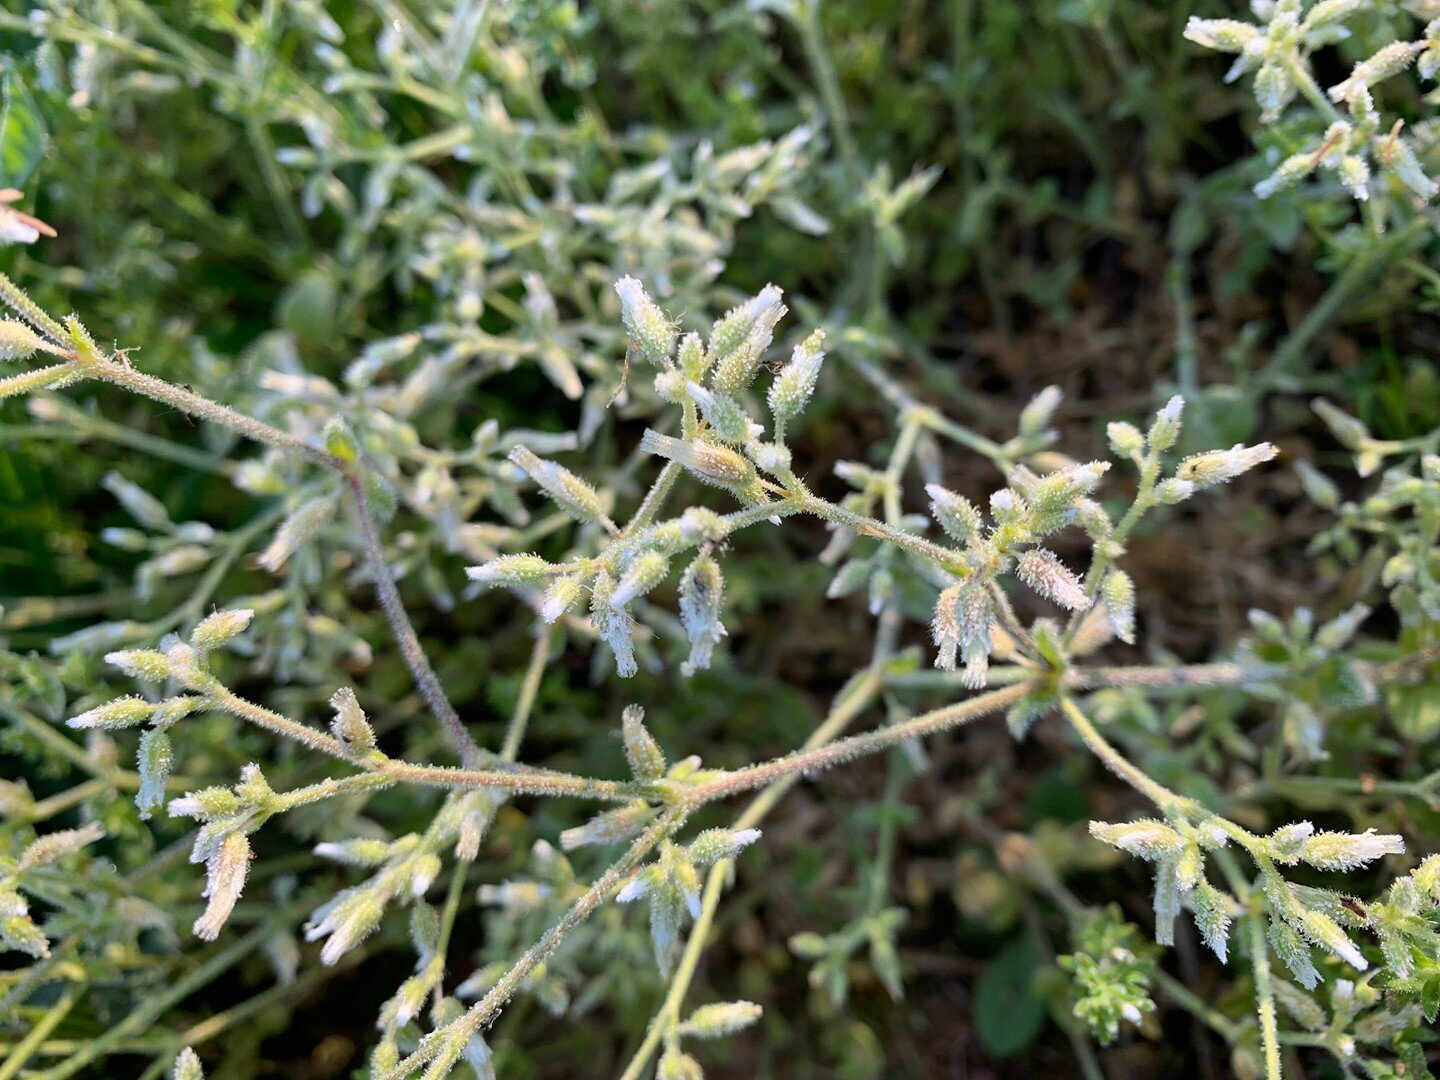 a little bit tender⁠
frost on buds, April in Va 2021⁠
.⁠
.⁠
.
.
.
.